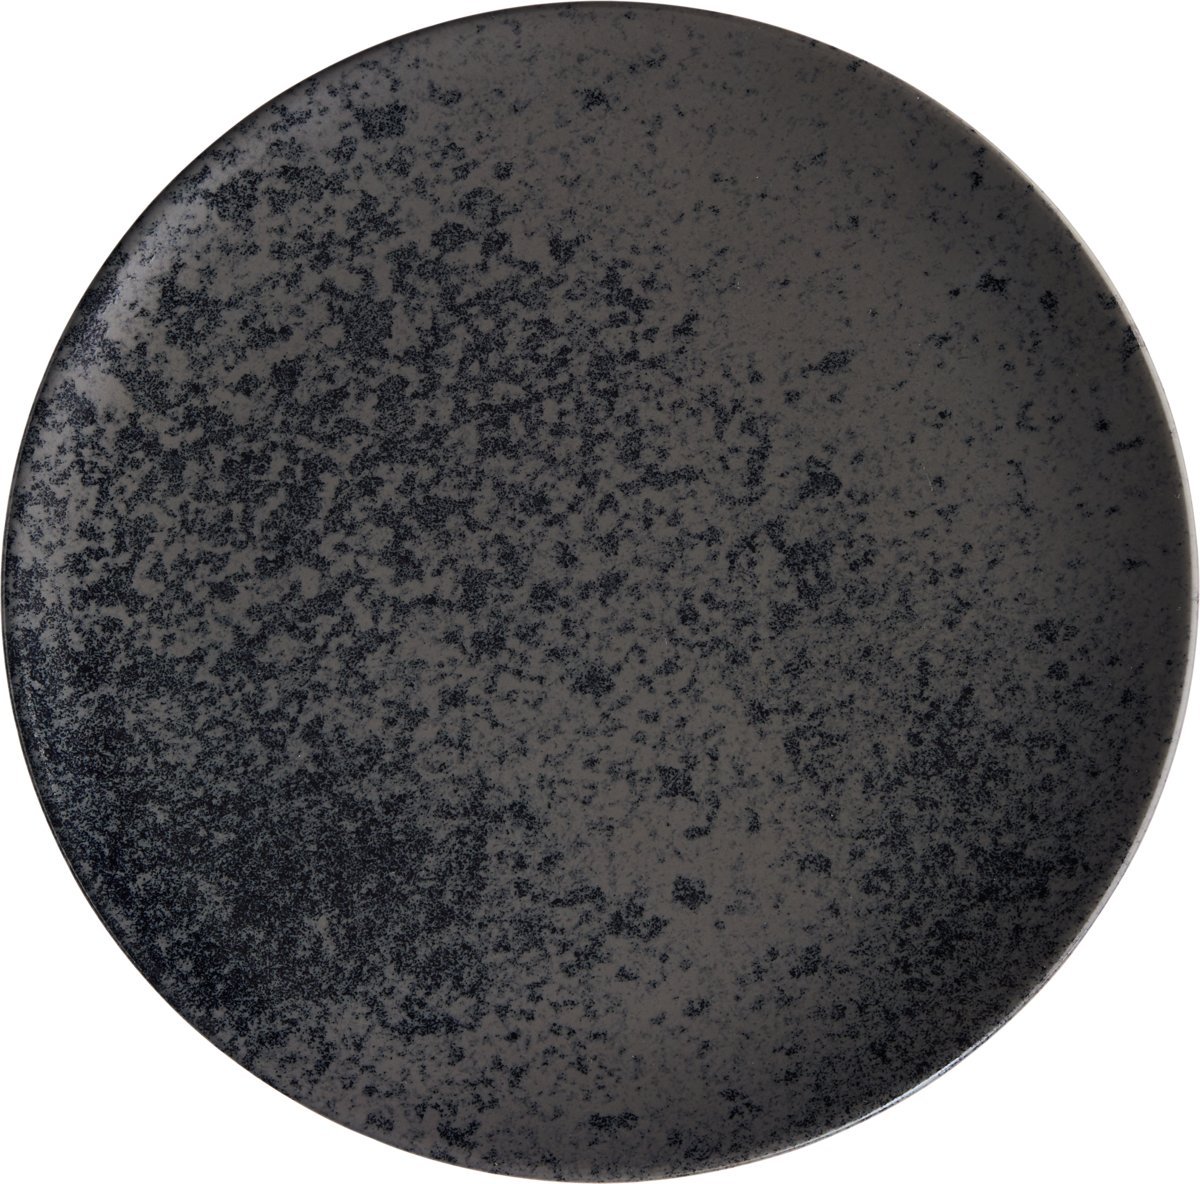 SANDSTONE BLACK PLATE FLAT COUP 23cm PORCELAINE Bauscher GERMANY